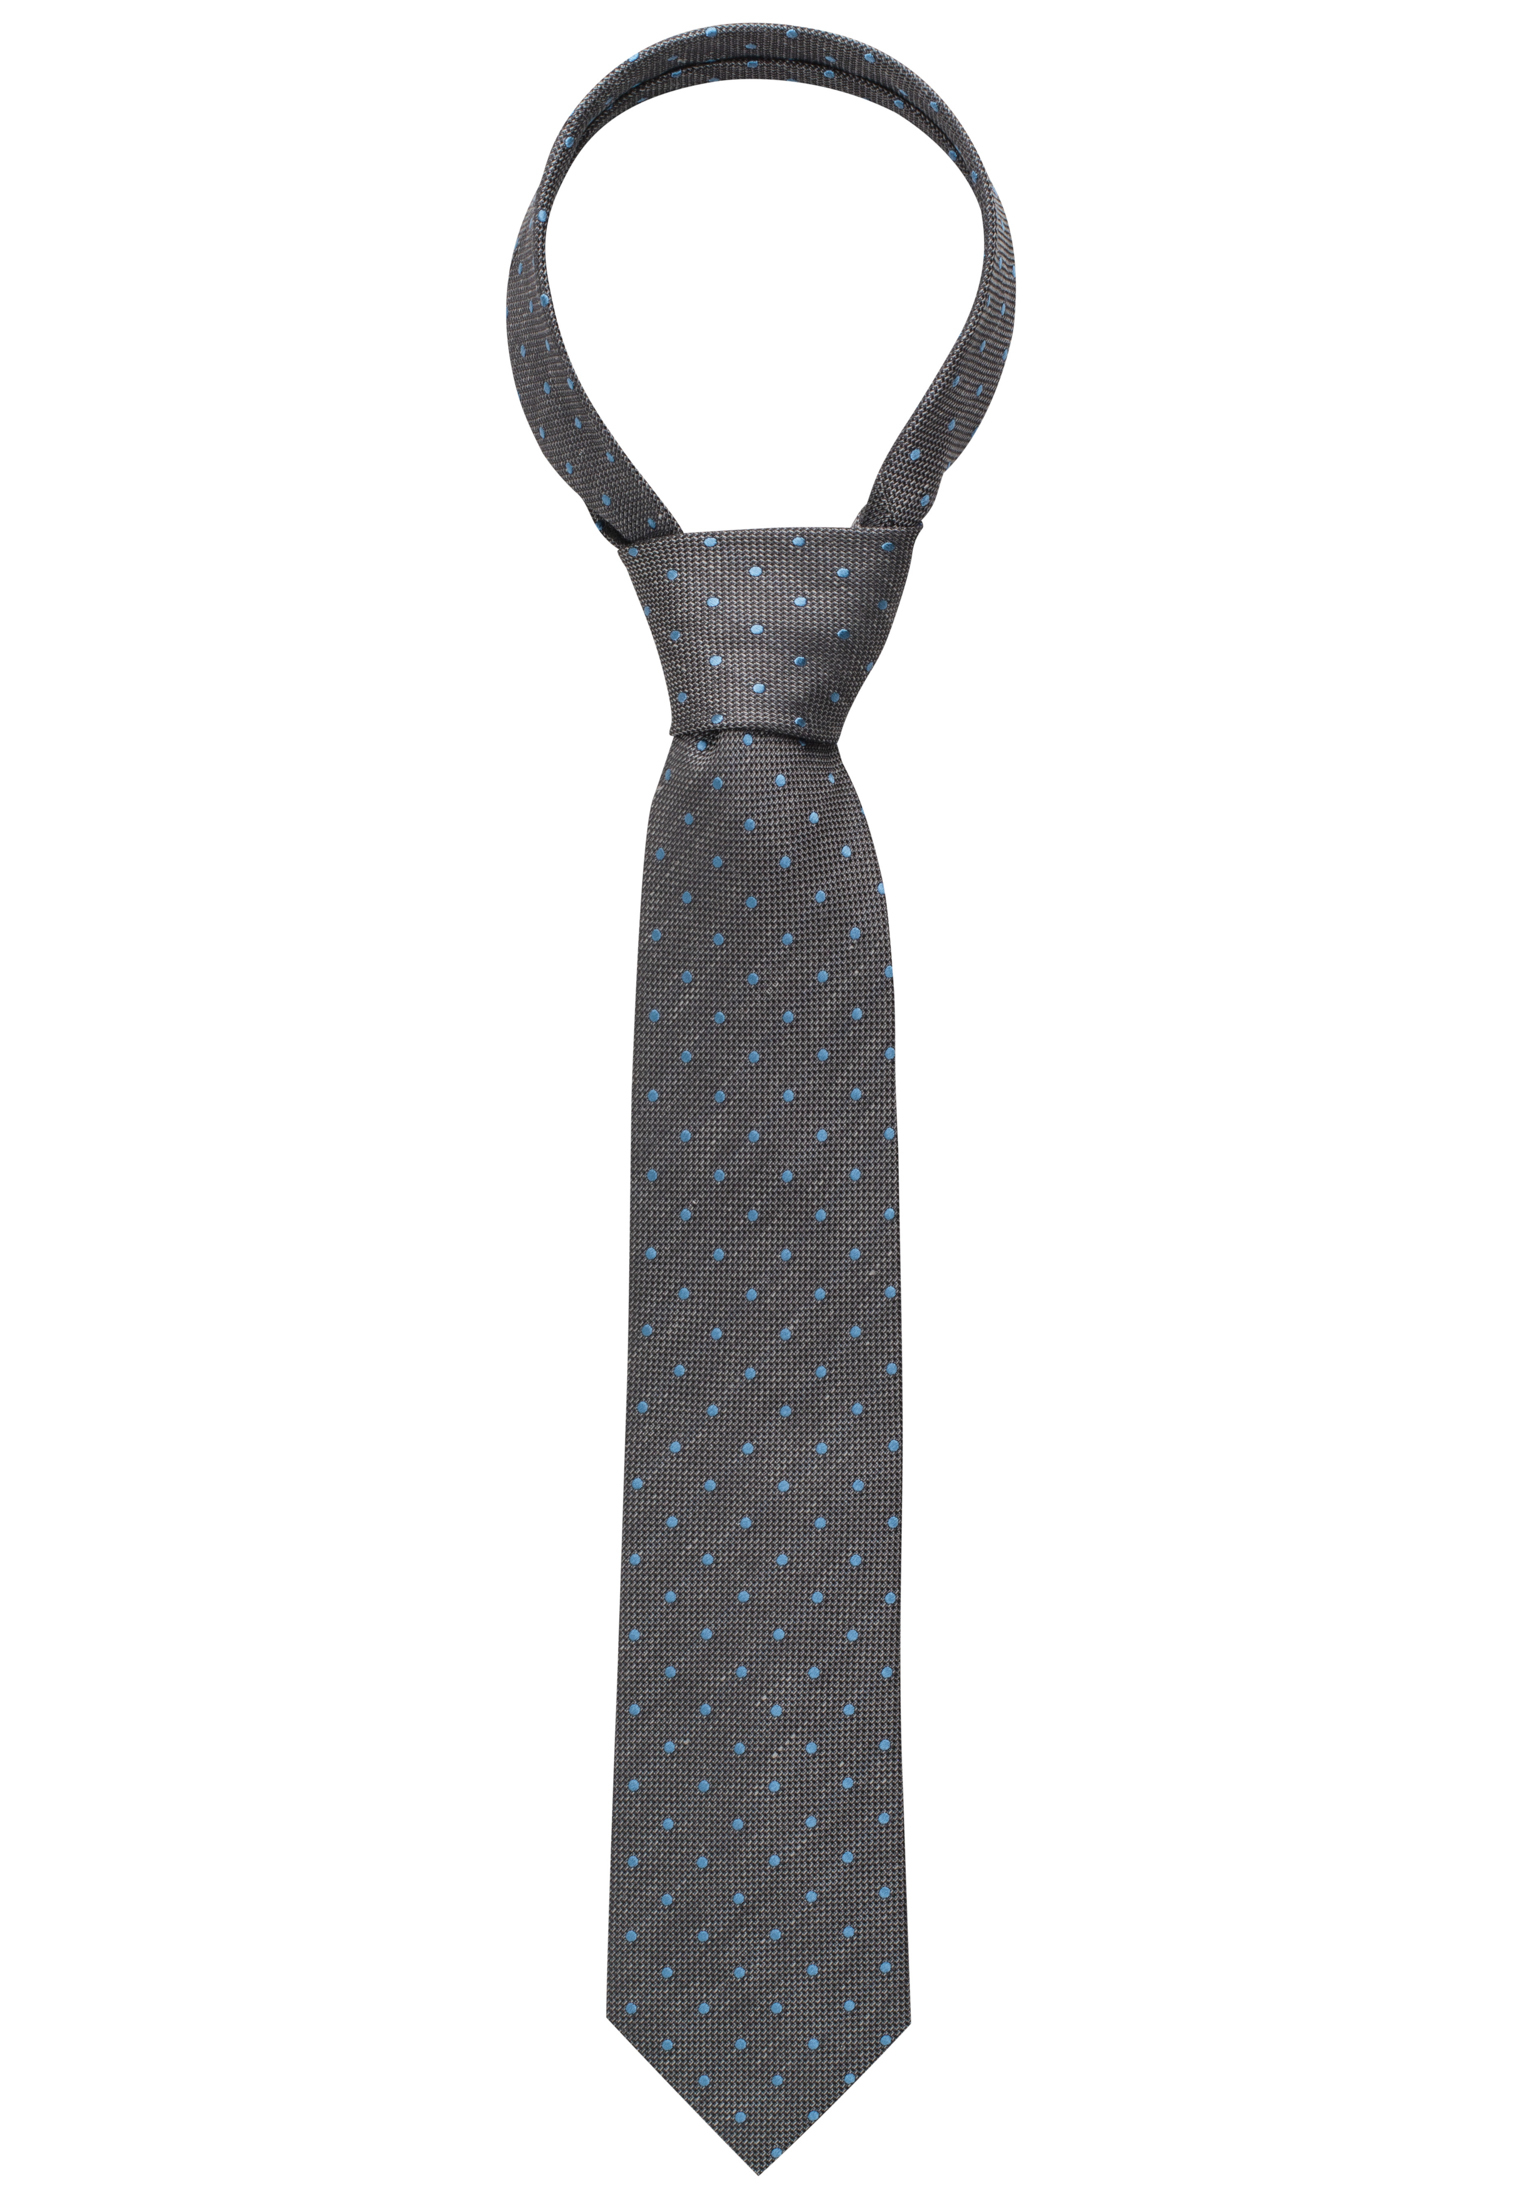 Krawatte in grau getupft | grau | 142 | 1AC00469-03-01-142 | Breite Krawatten